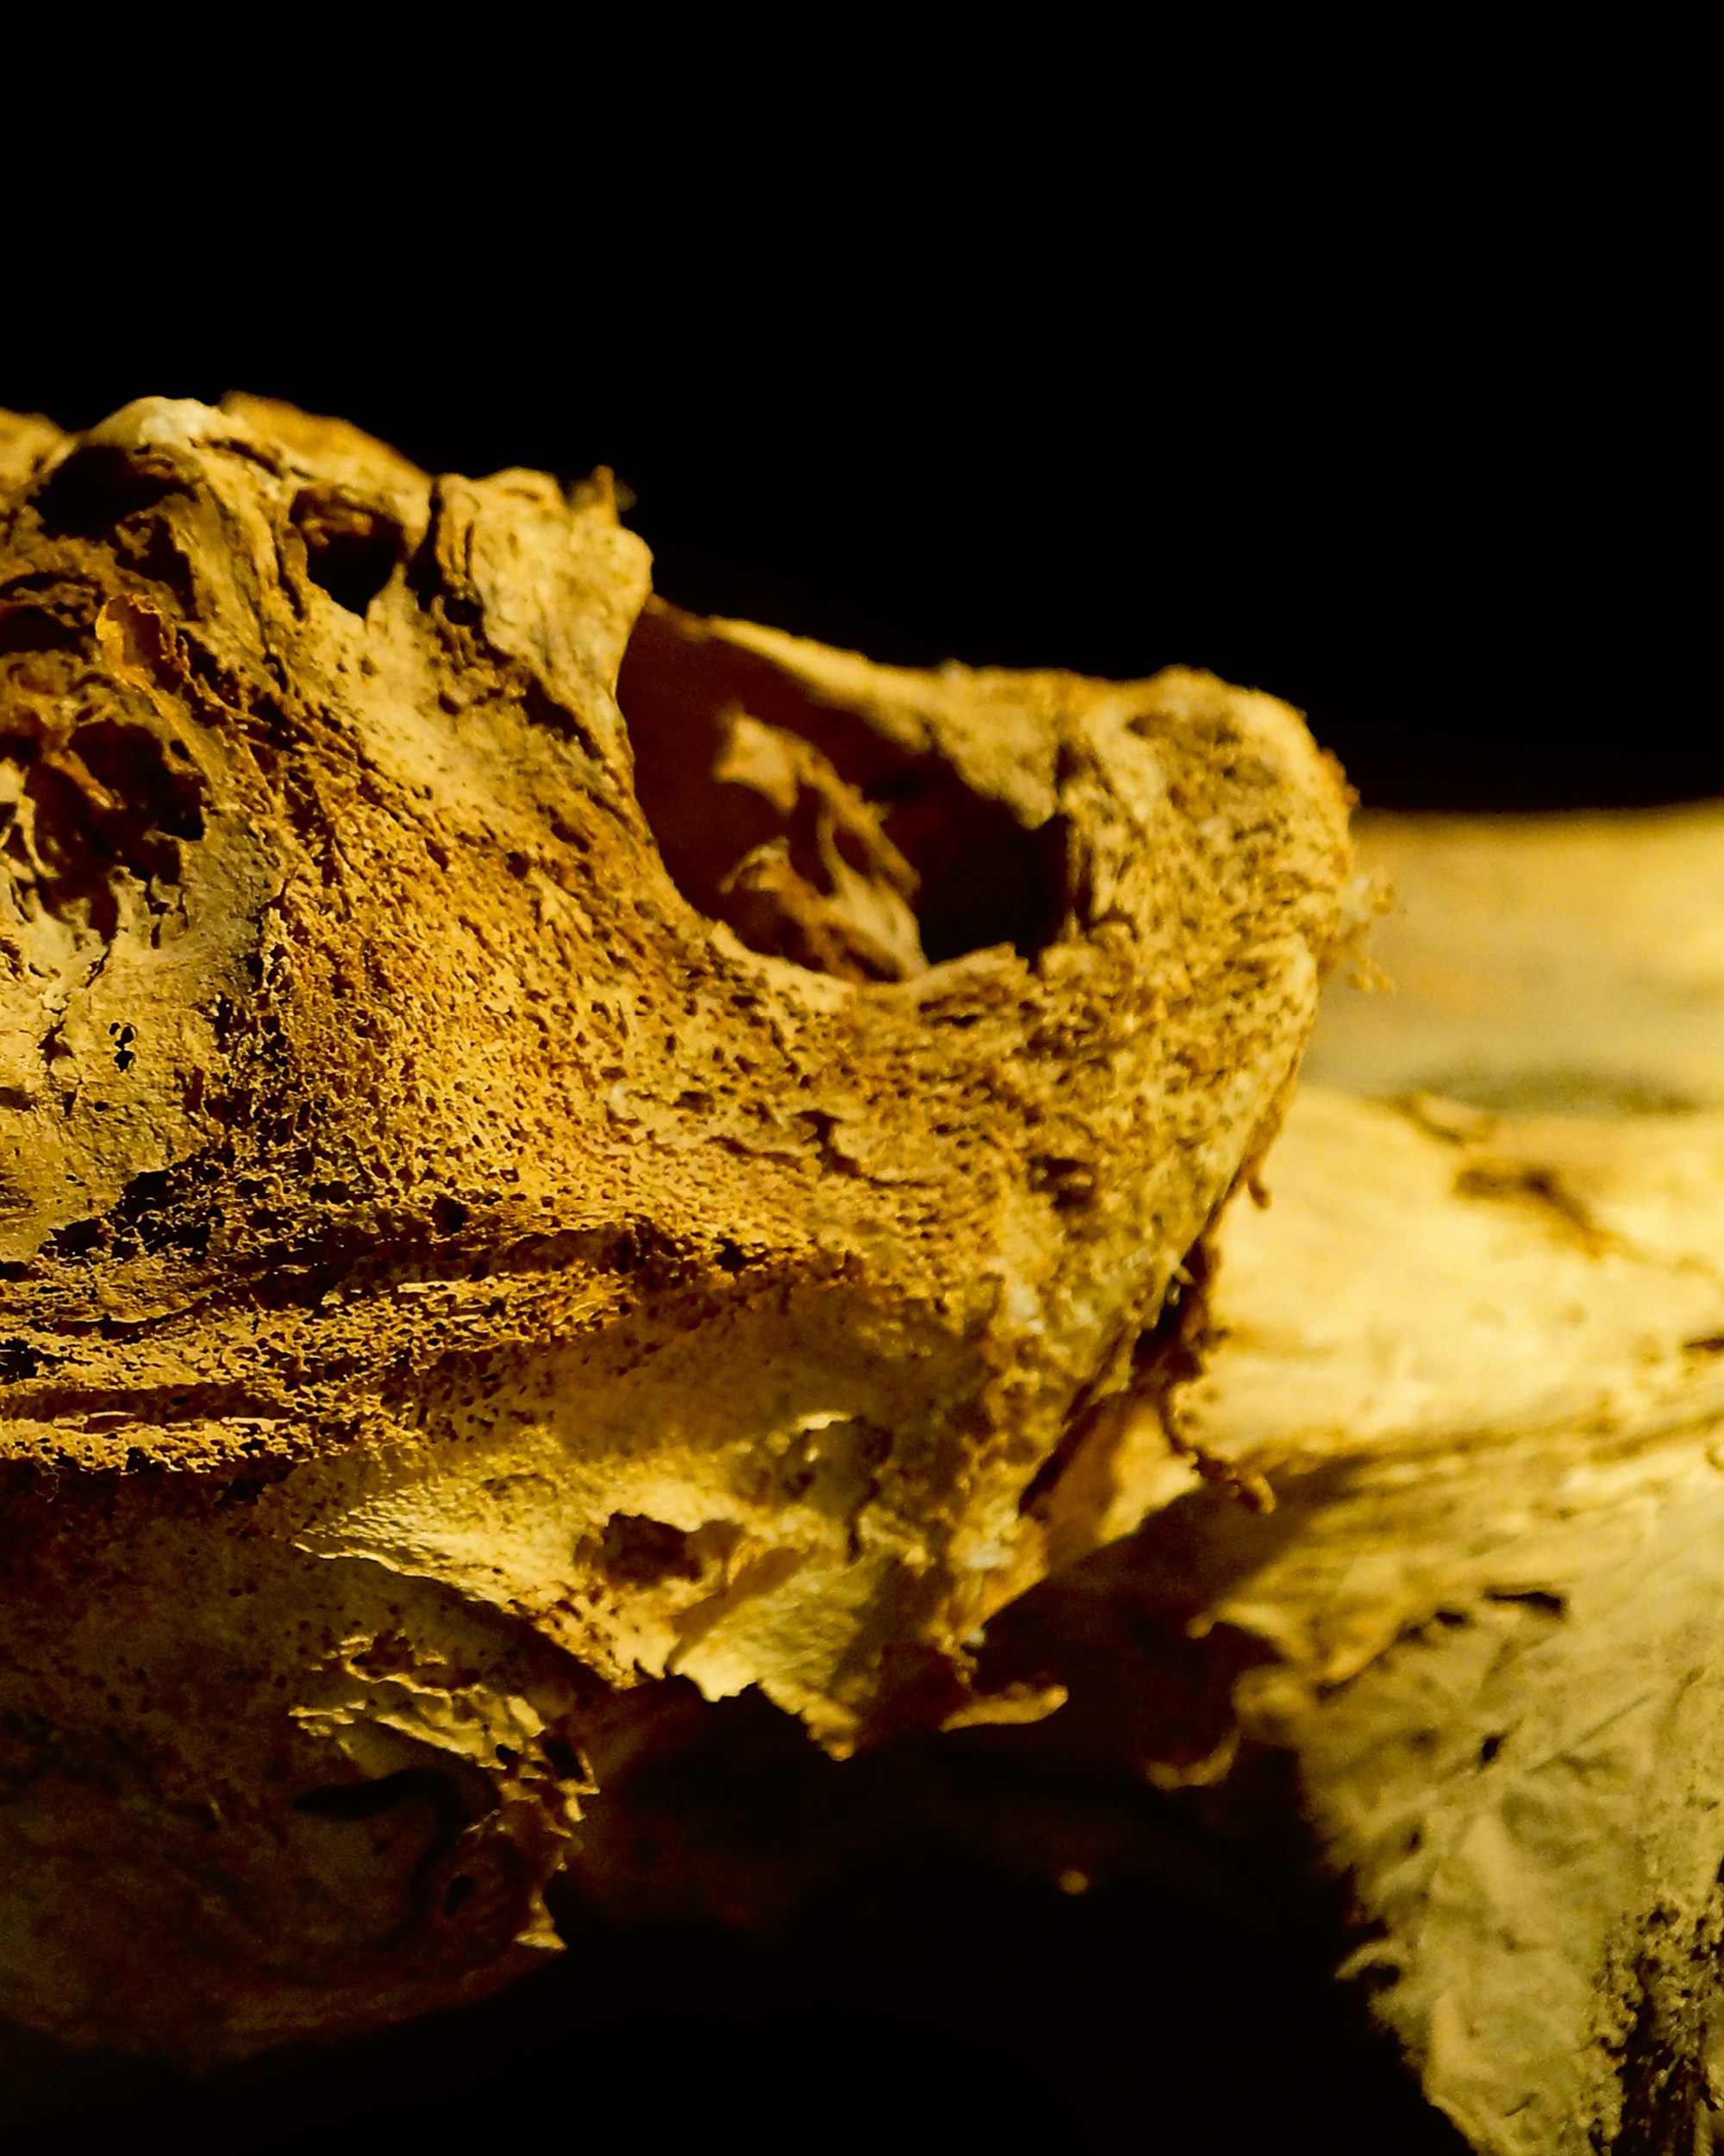 A close-up photograph of a mummified face.